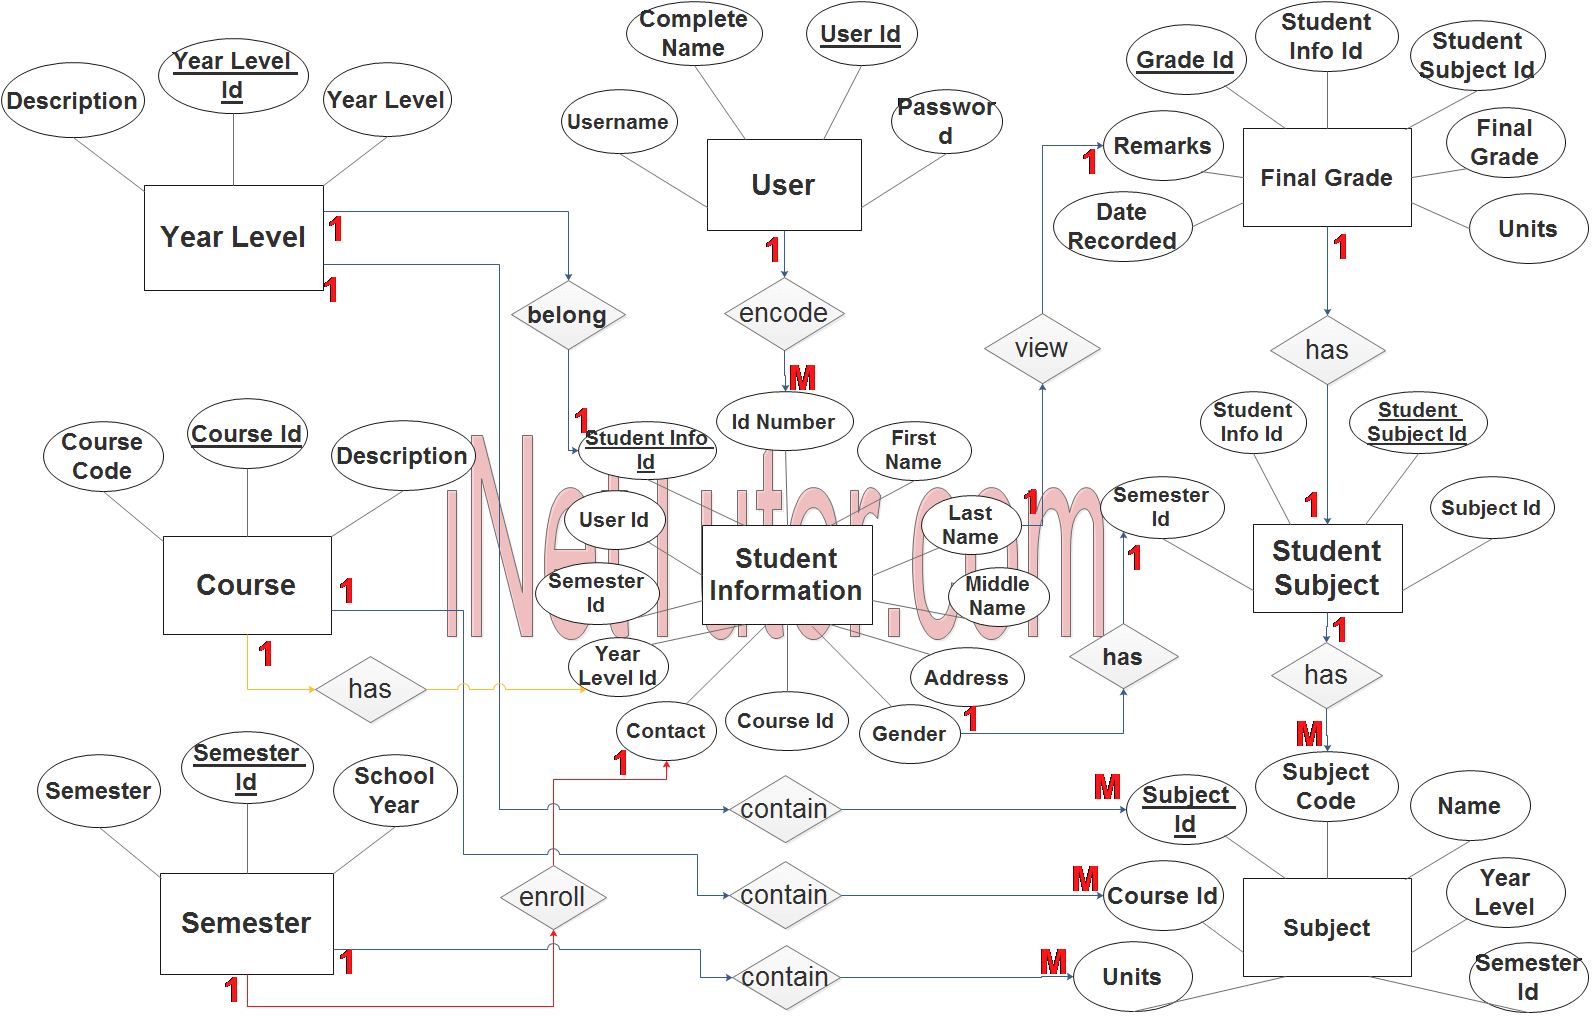 Transcript of Records Processing System ER Diagram - Step 3 Complete ERD